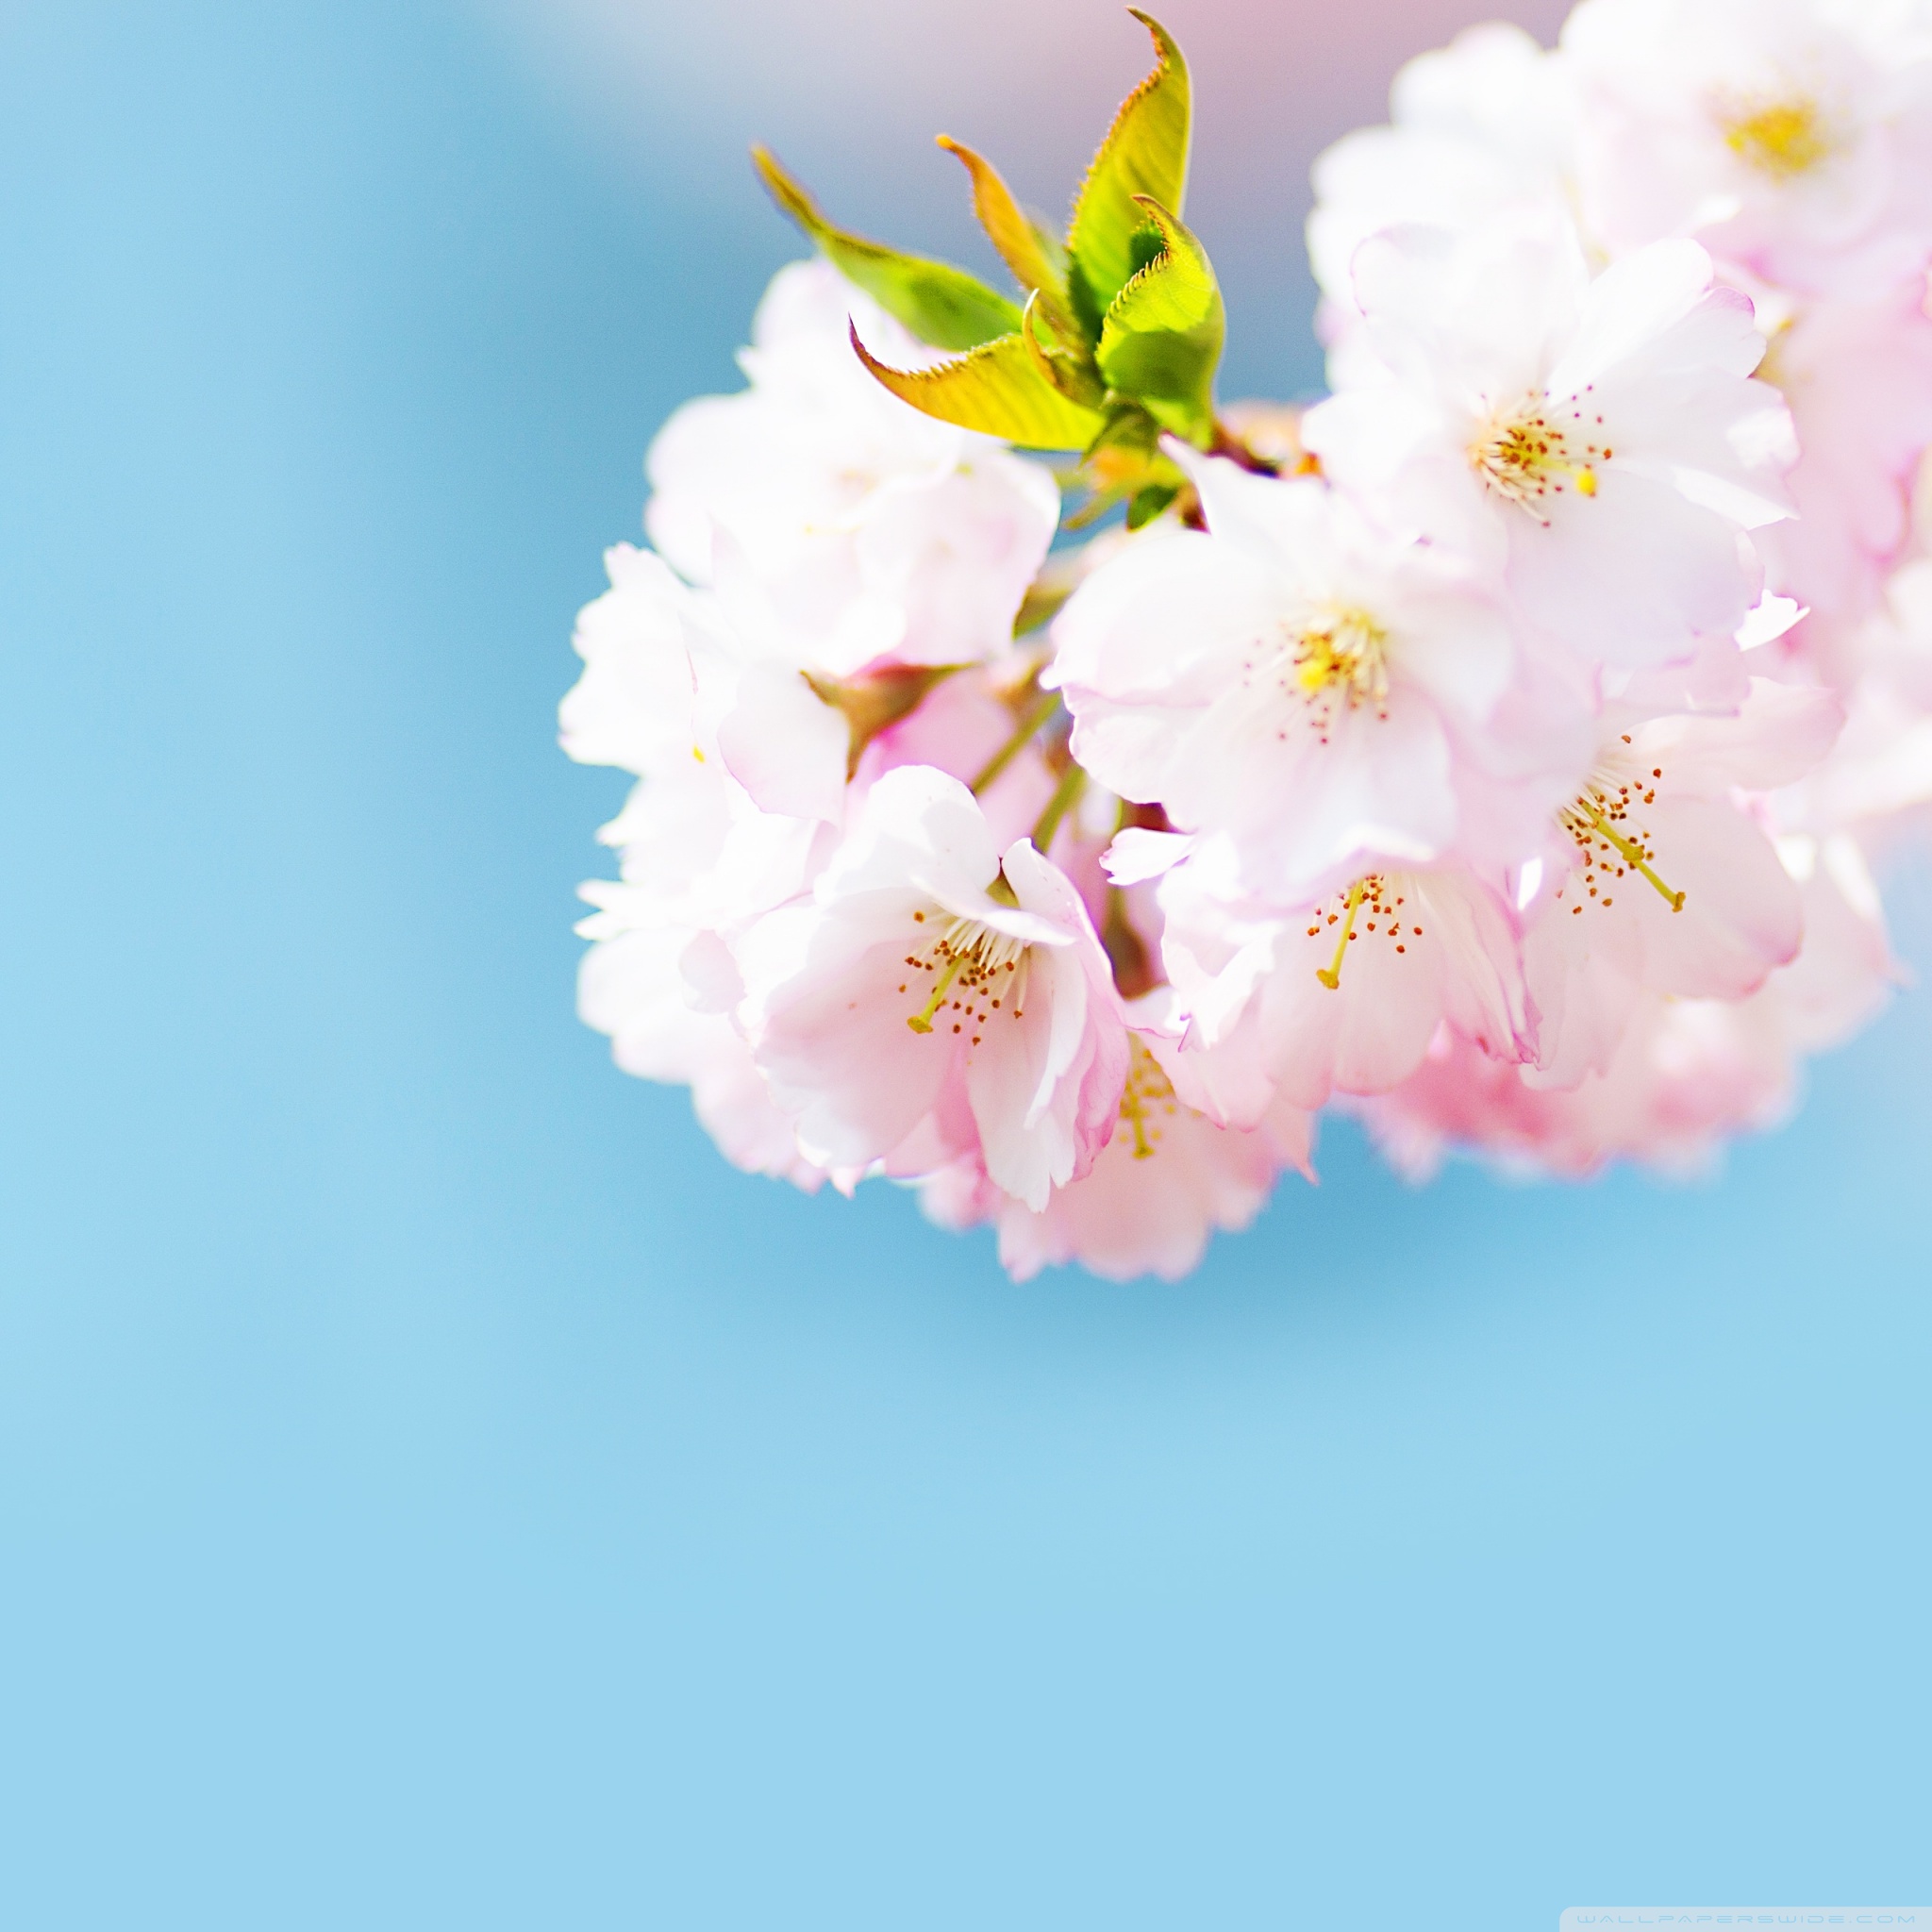 Cute Cherry Blossom Ultra HD Desktop Background Wallpaper for 4K UHD TV, Widescreen & UltraWide Desktop & Laptop, Multi Display, Dual Monitor, Tablet